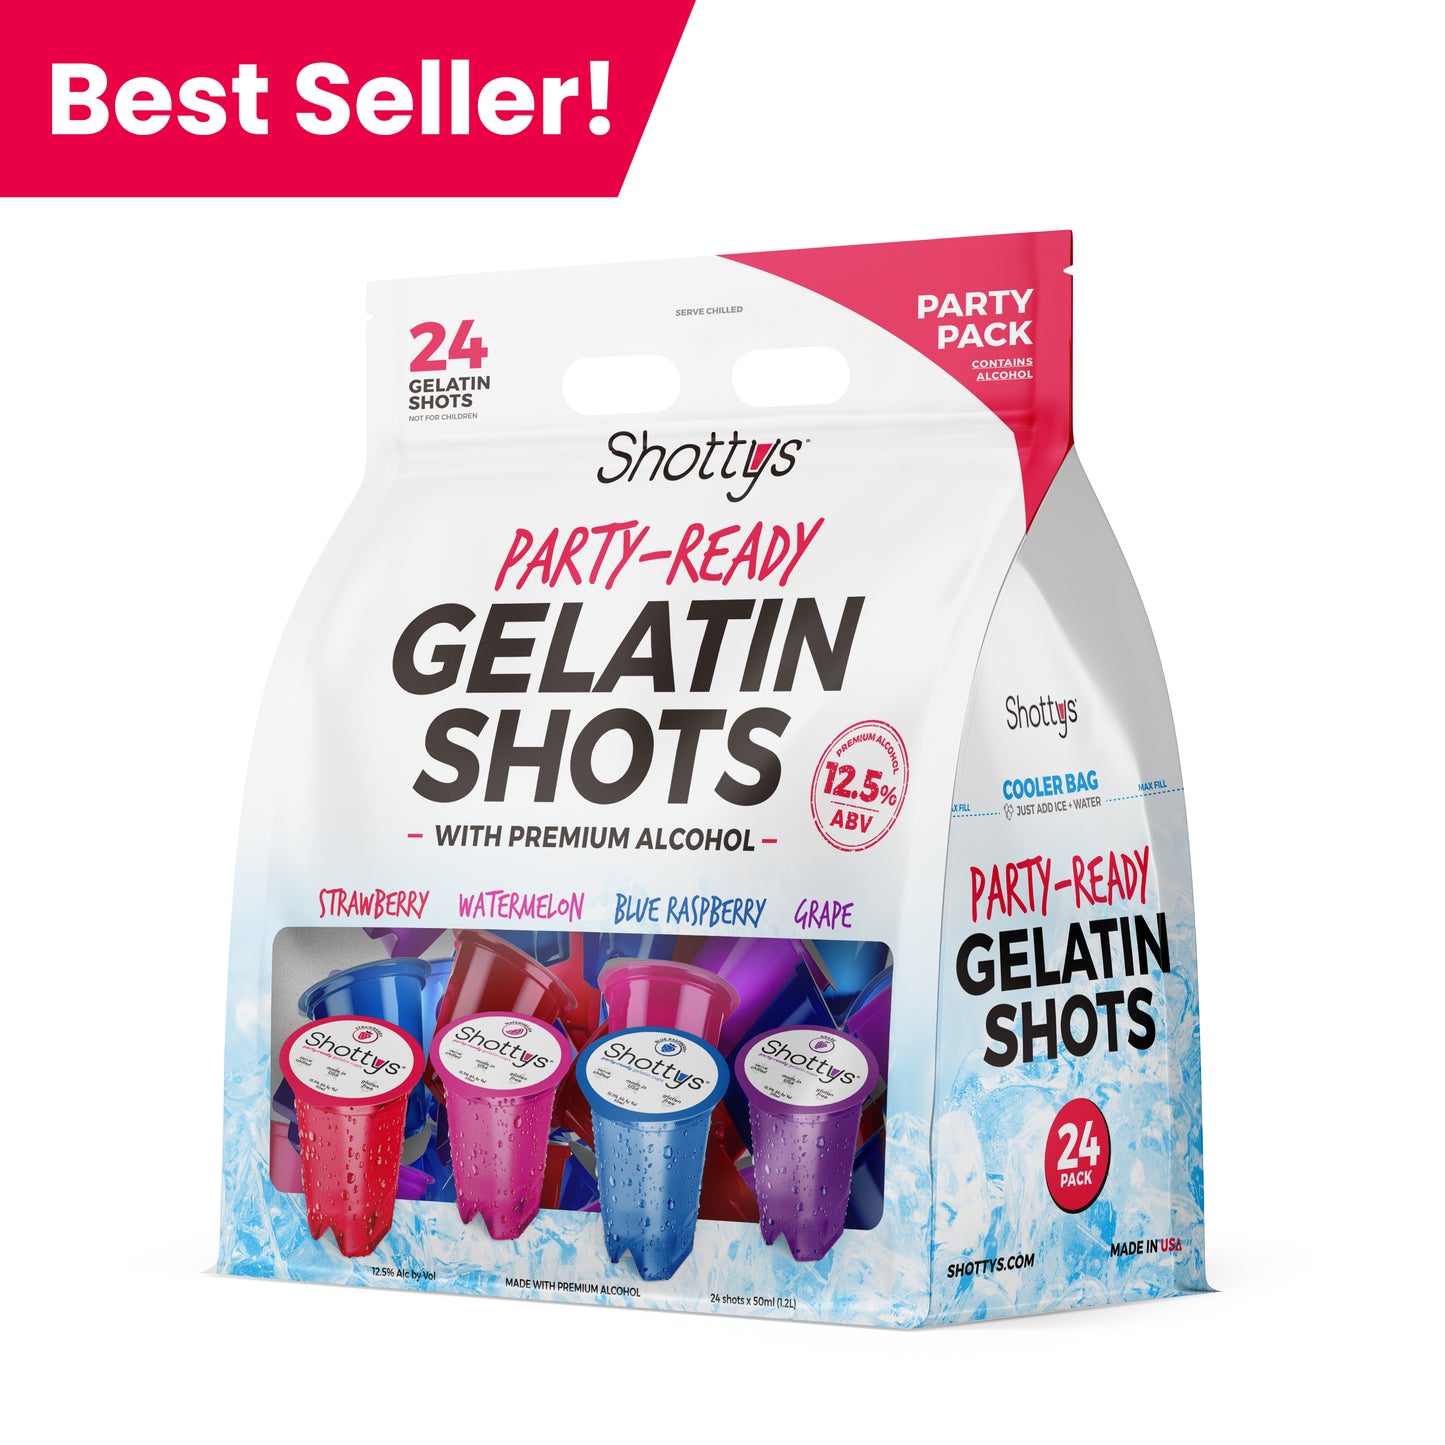 Classic Gelatin Shots (24 shots)